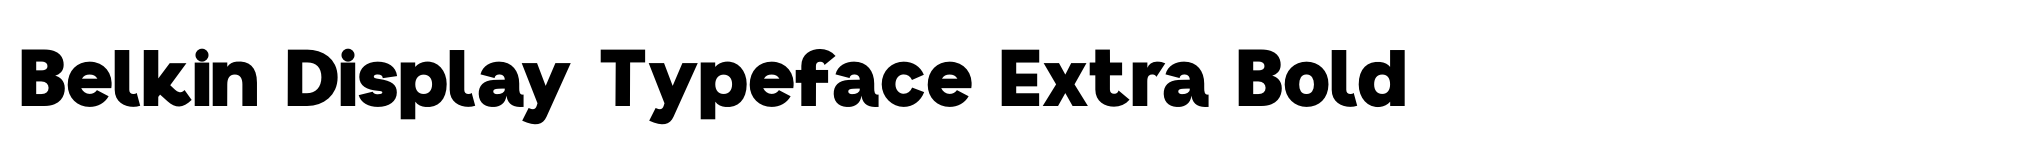 Belkin Display Typeface Extra Bold image